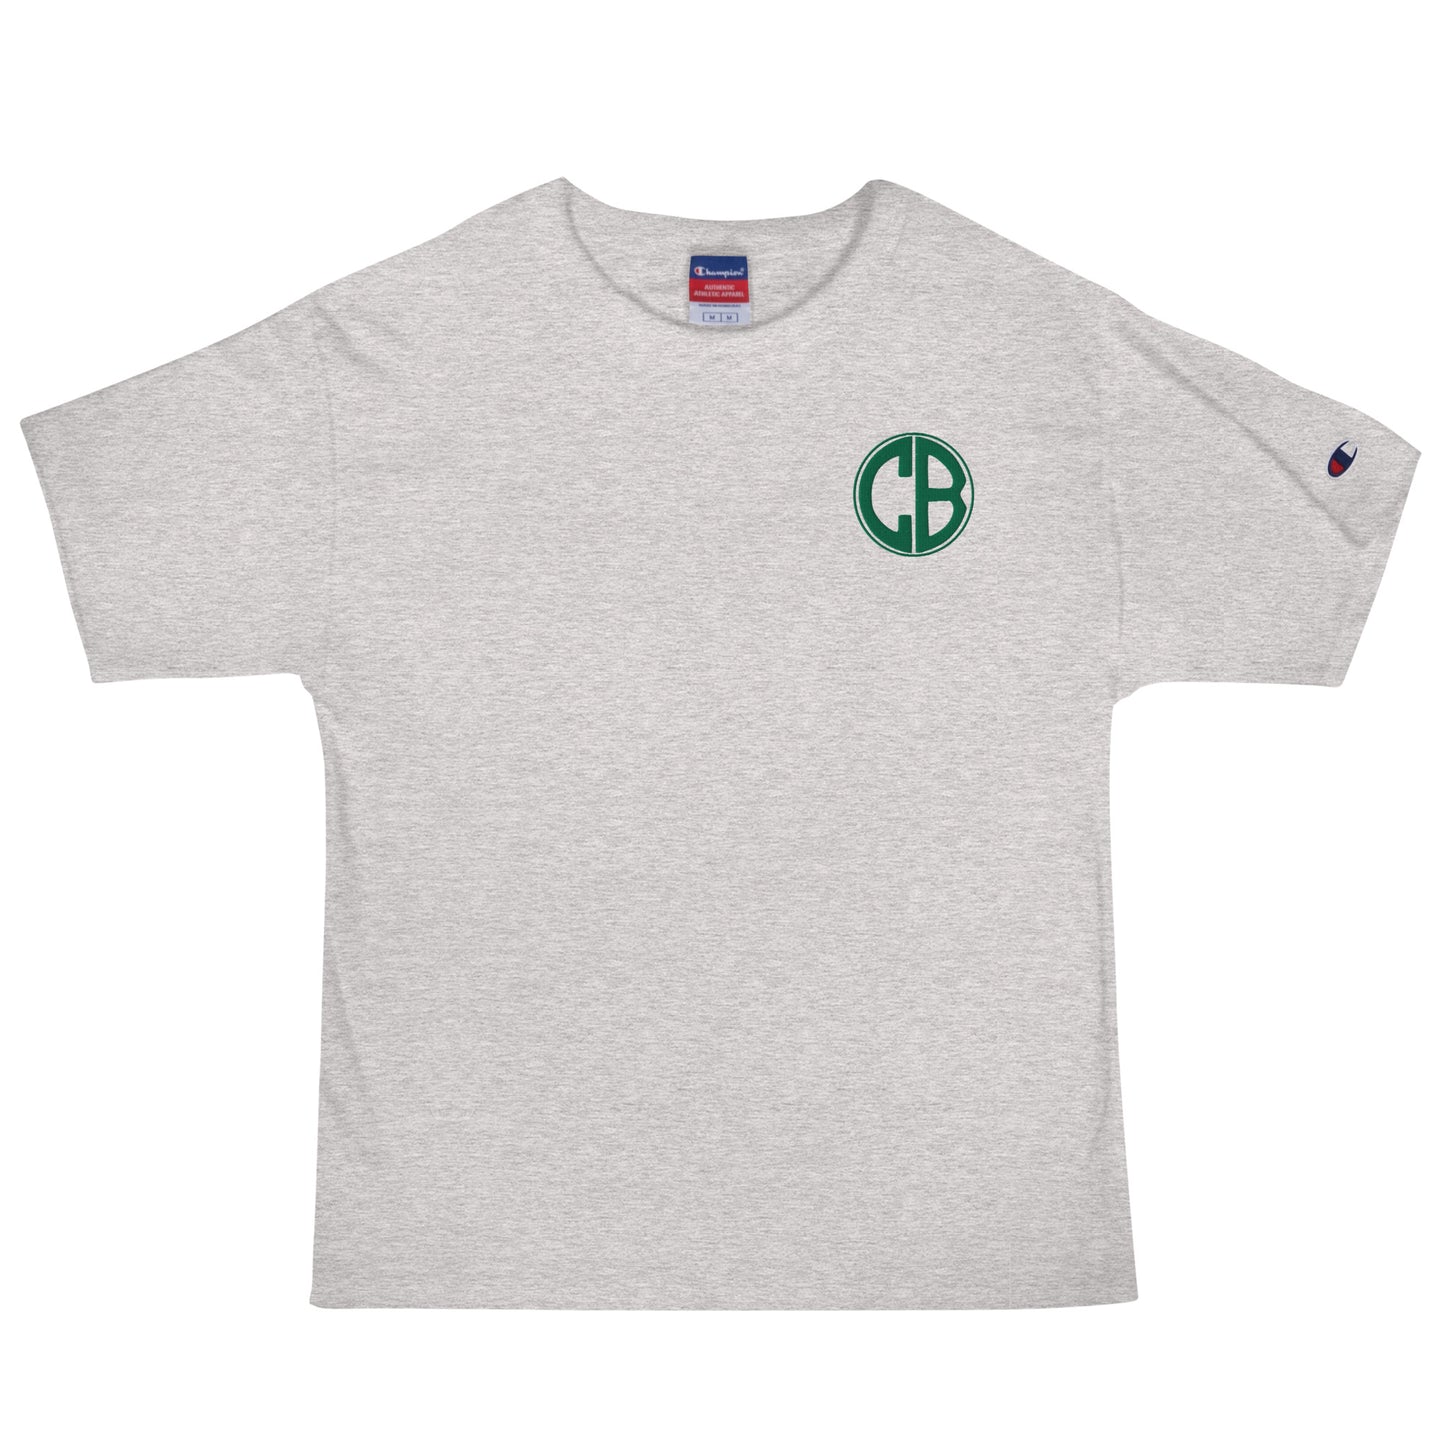 CB Embroidered Men's Champion T-Shirt